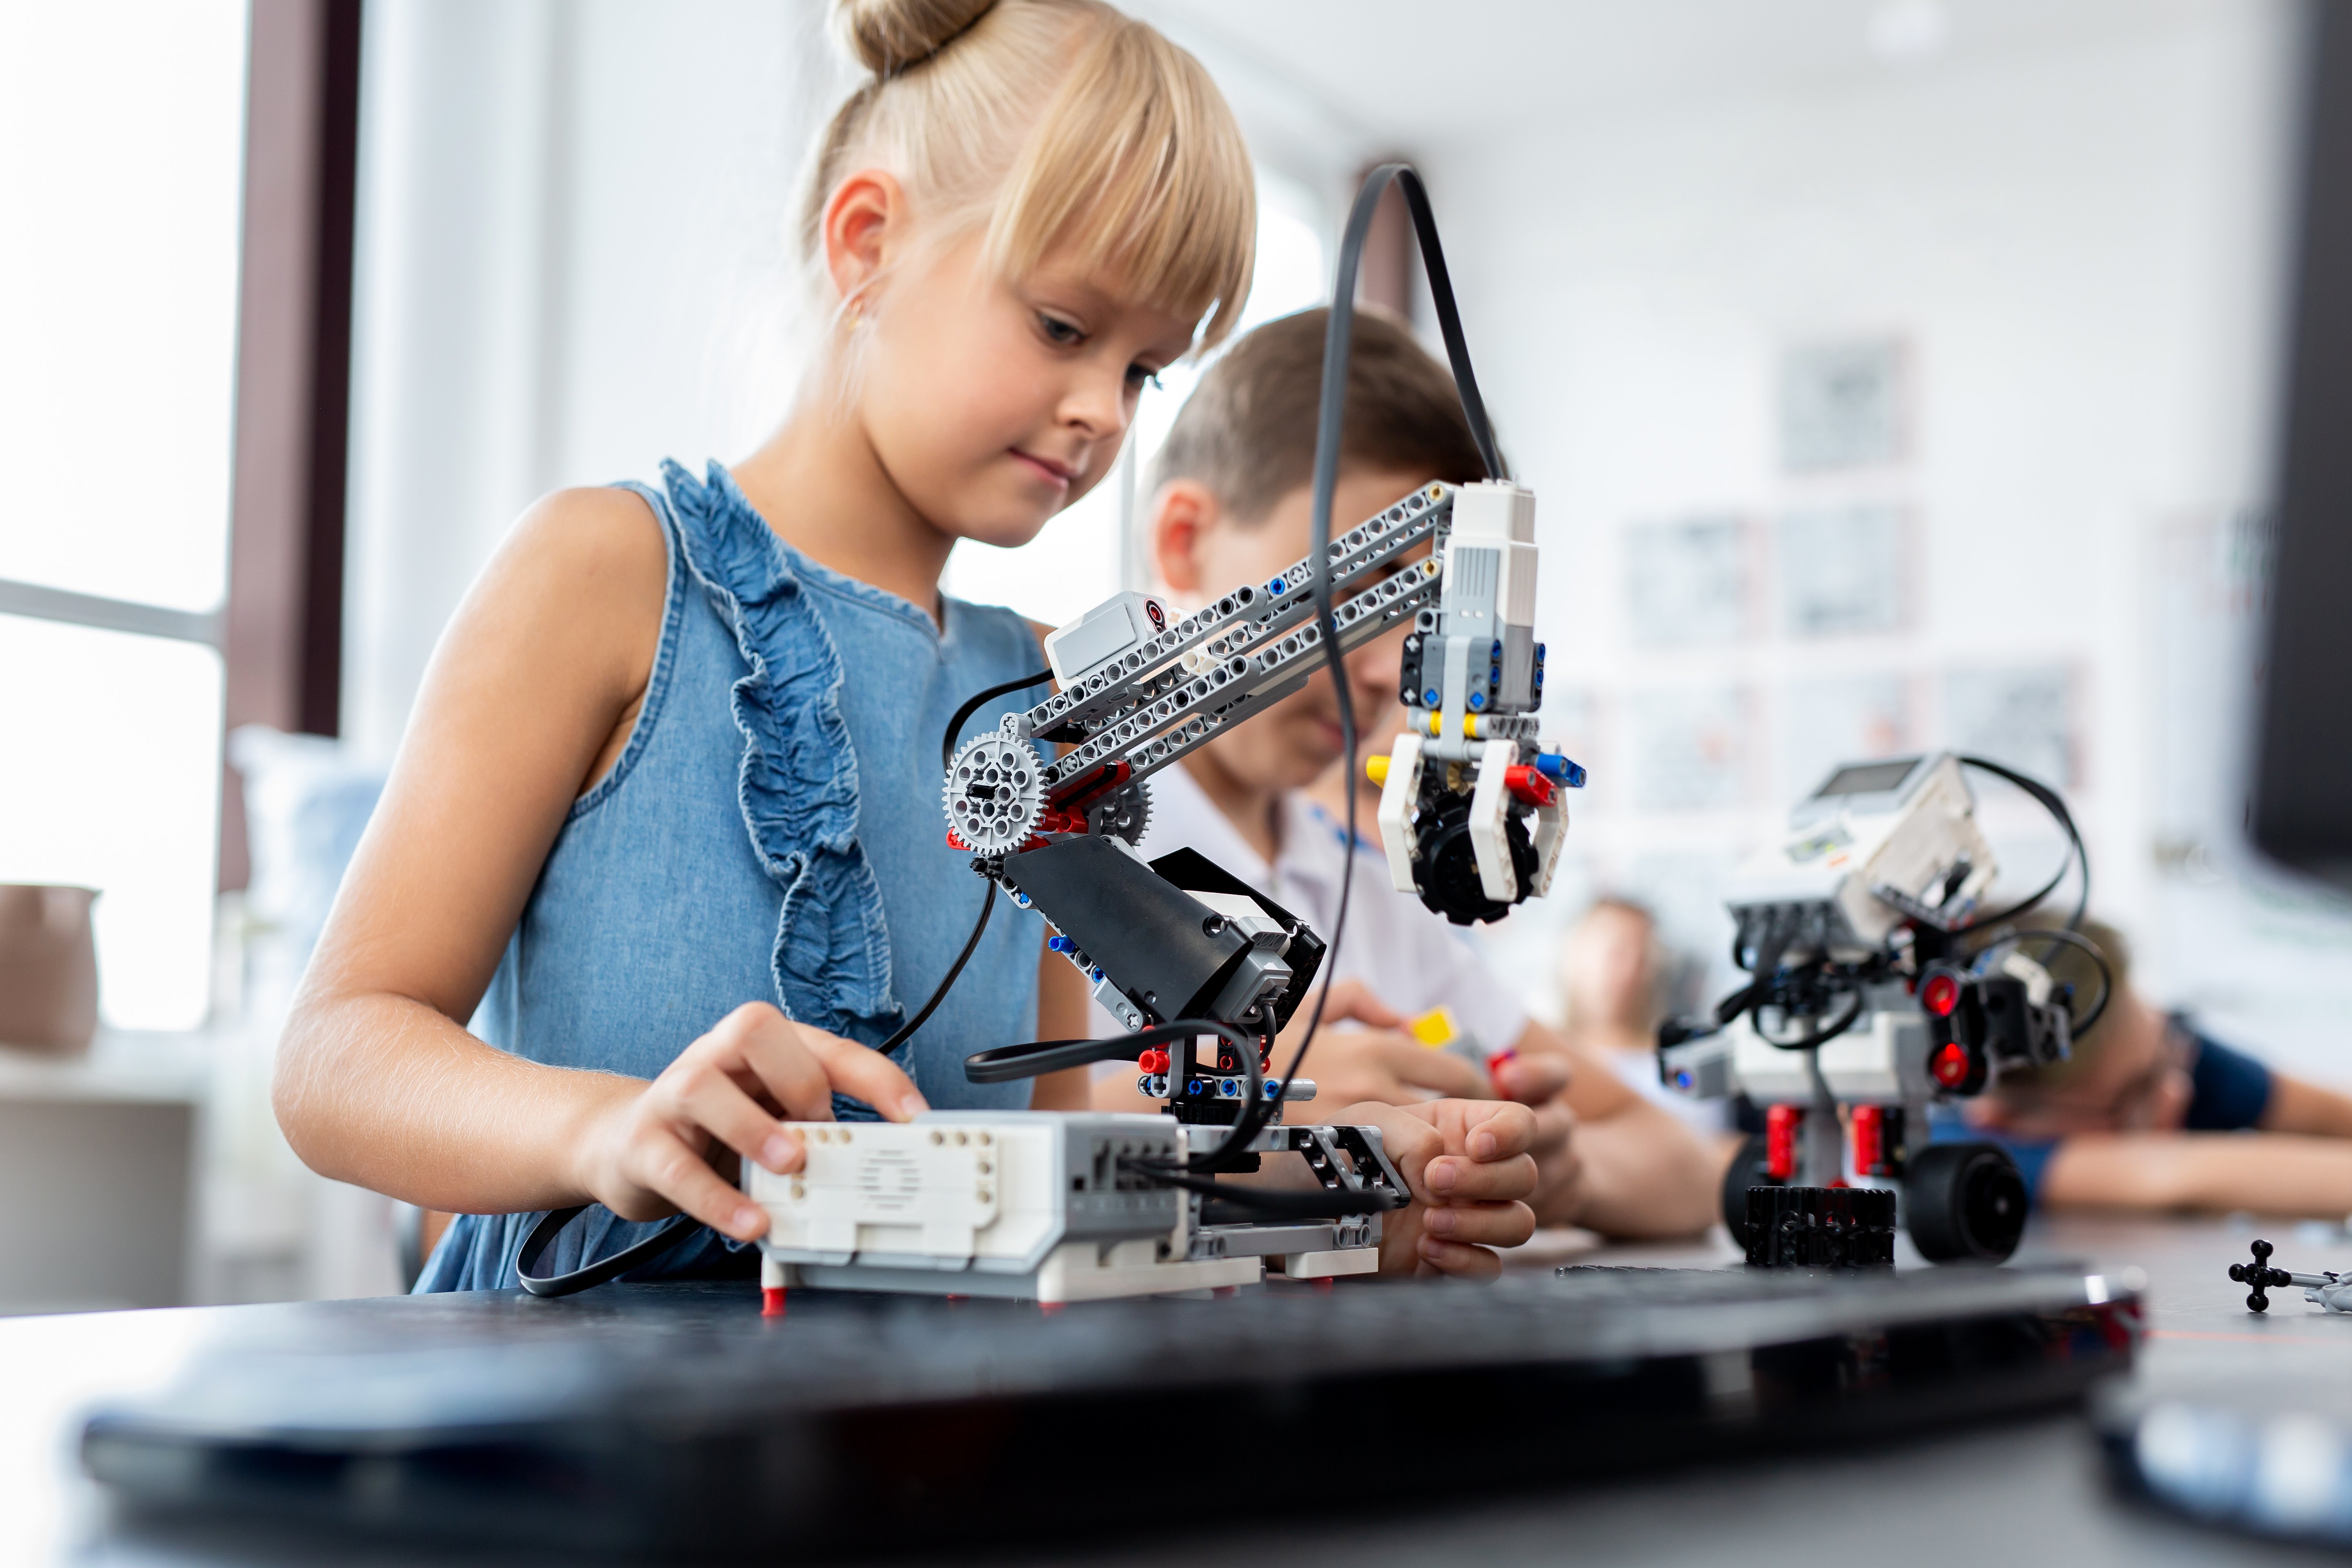 children-in-a-robotics-class-in-the-classroom-2022-02-22-03-51-28-utc